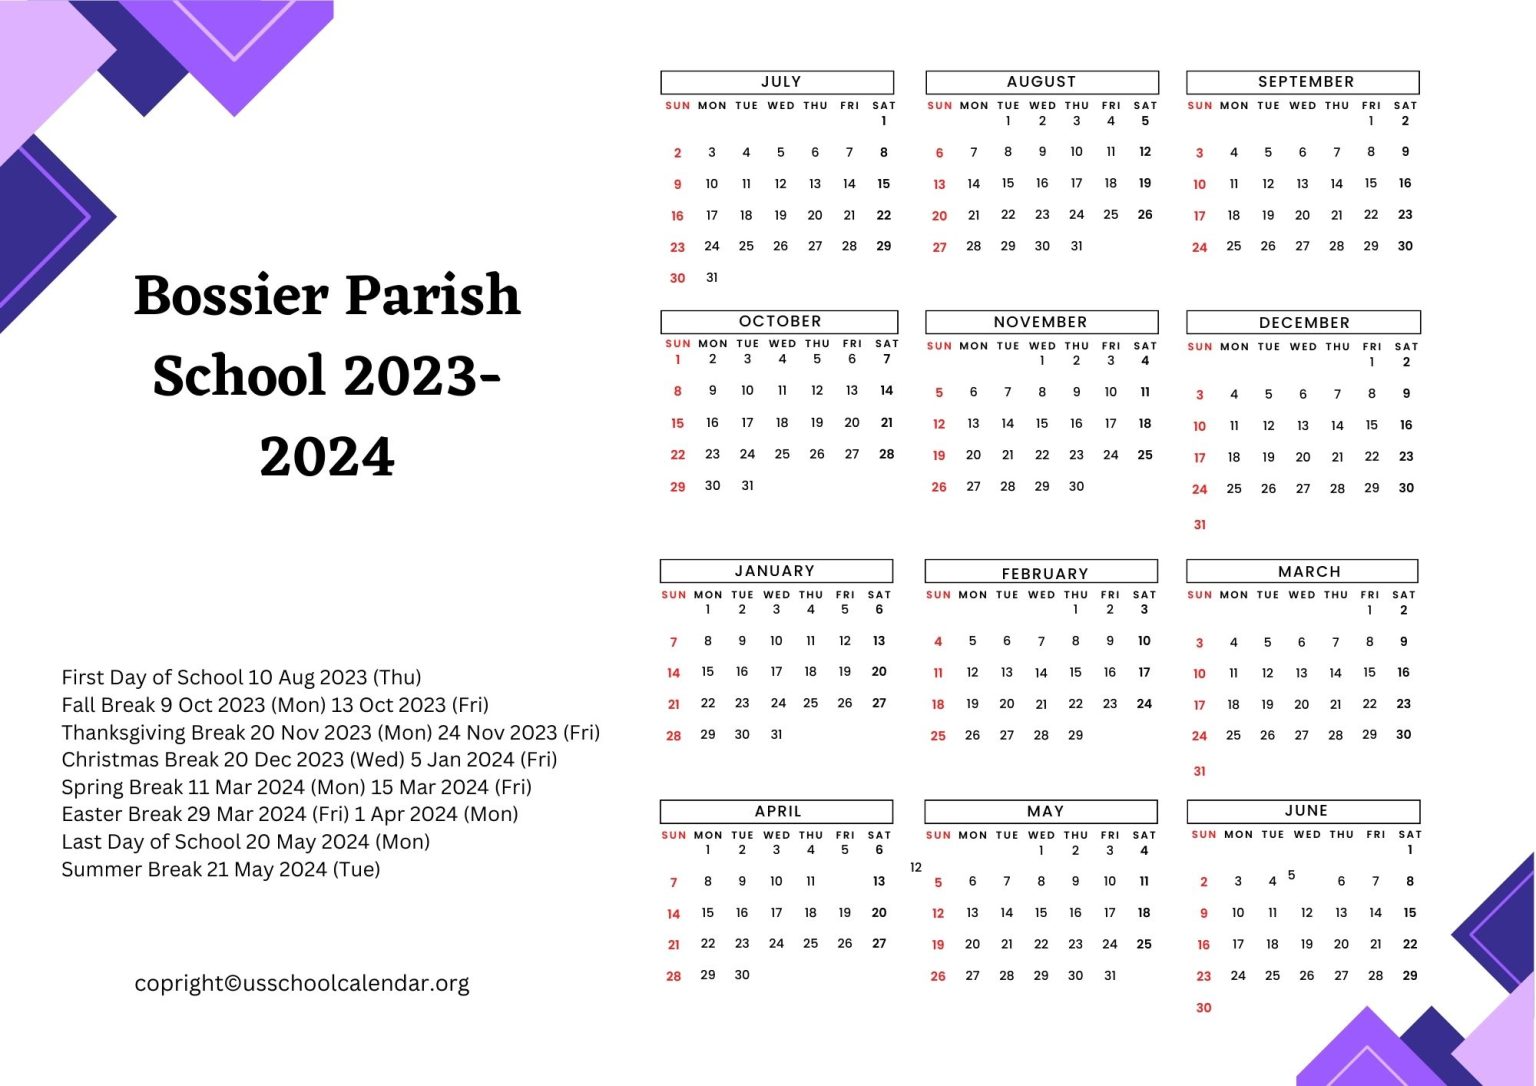 st-charles-parish-school-board-approves-revised-school-calendar-wgno